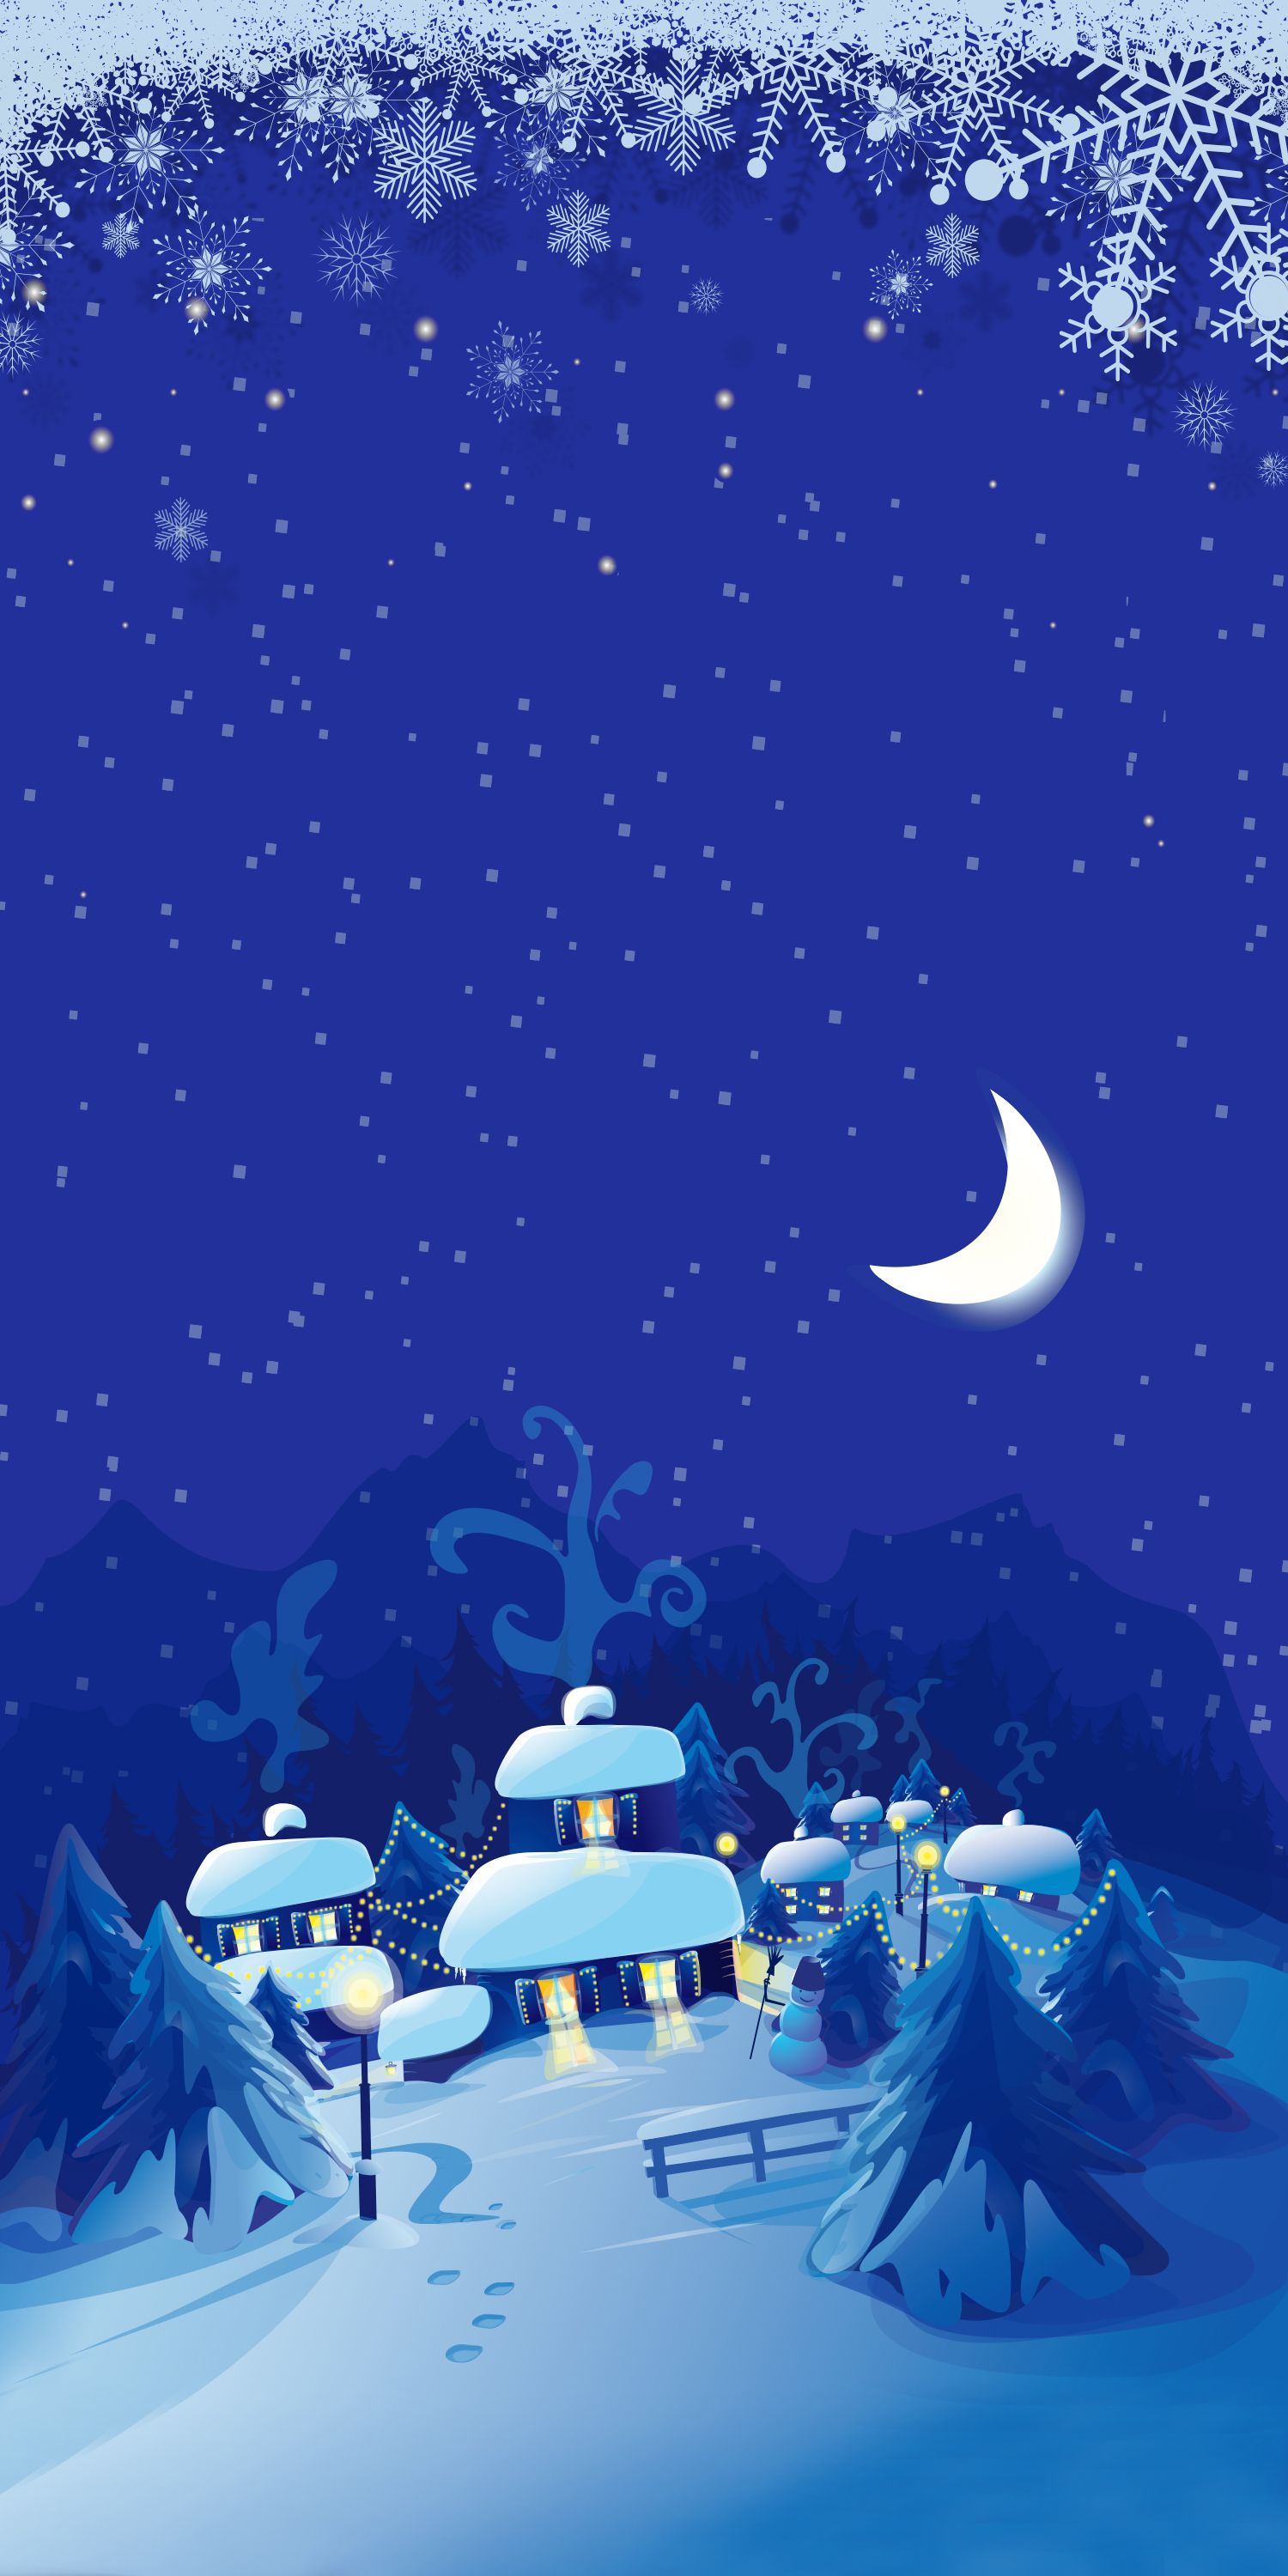 Snowy wallpaper illustrations for iPhoneidownloadblog.com